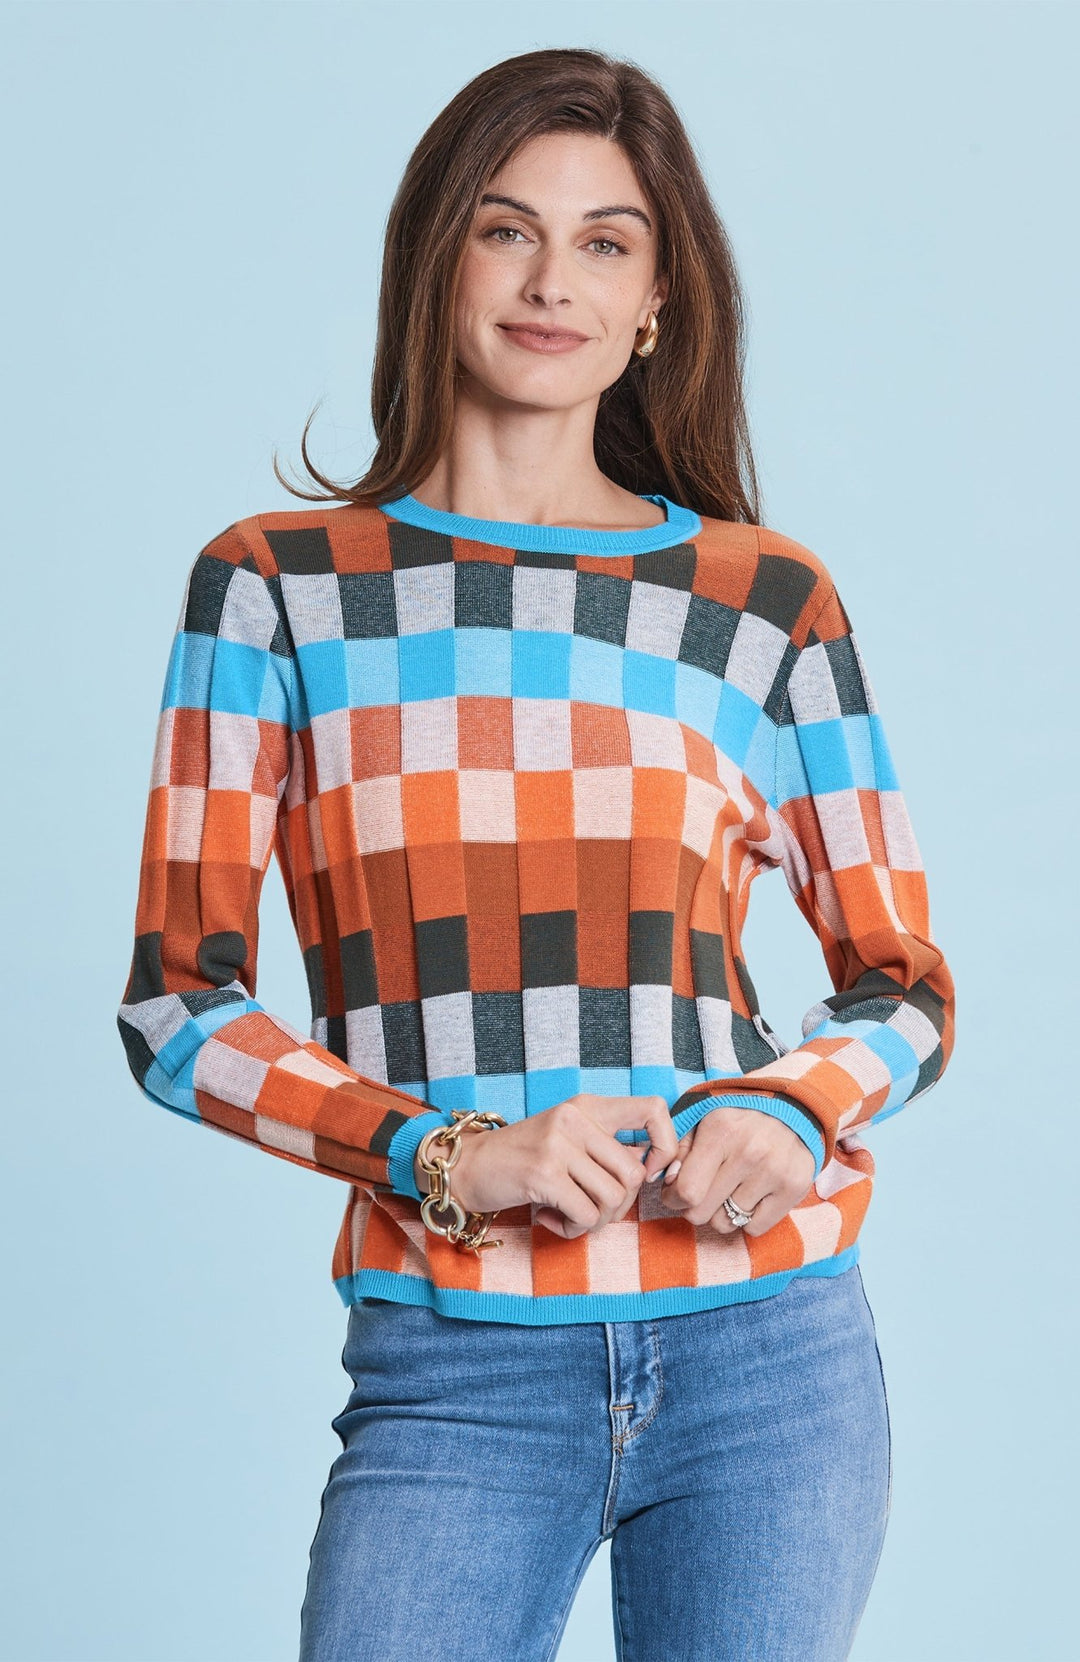 Tyler Boe - Check Pattern Crewneck Sweater: Multi - Shorely Chic Boutique